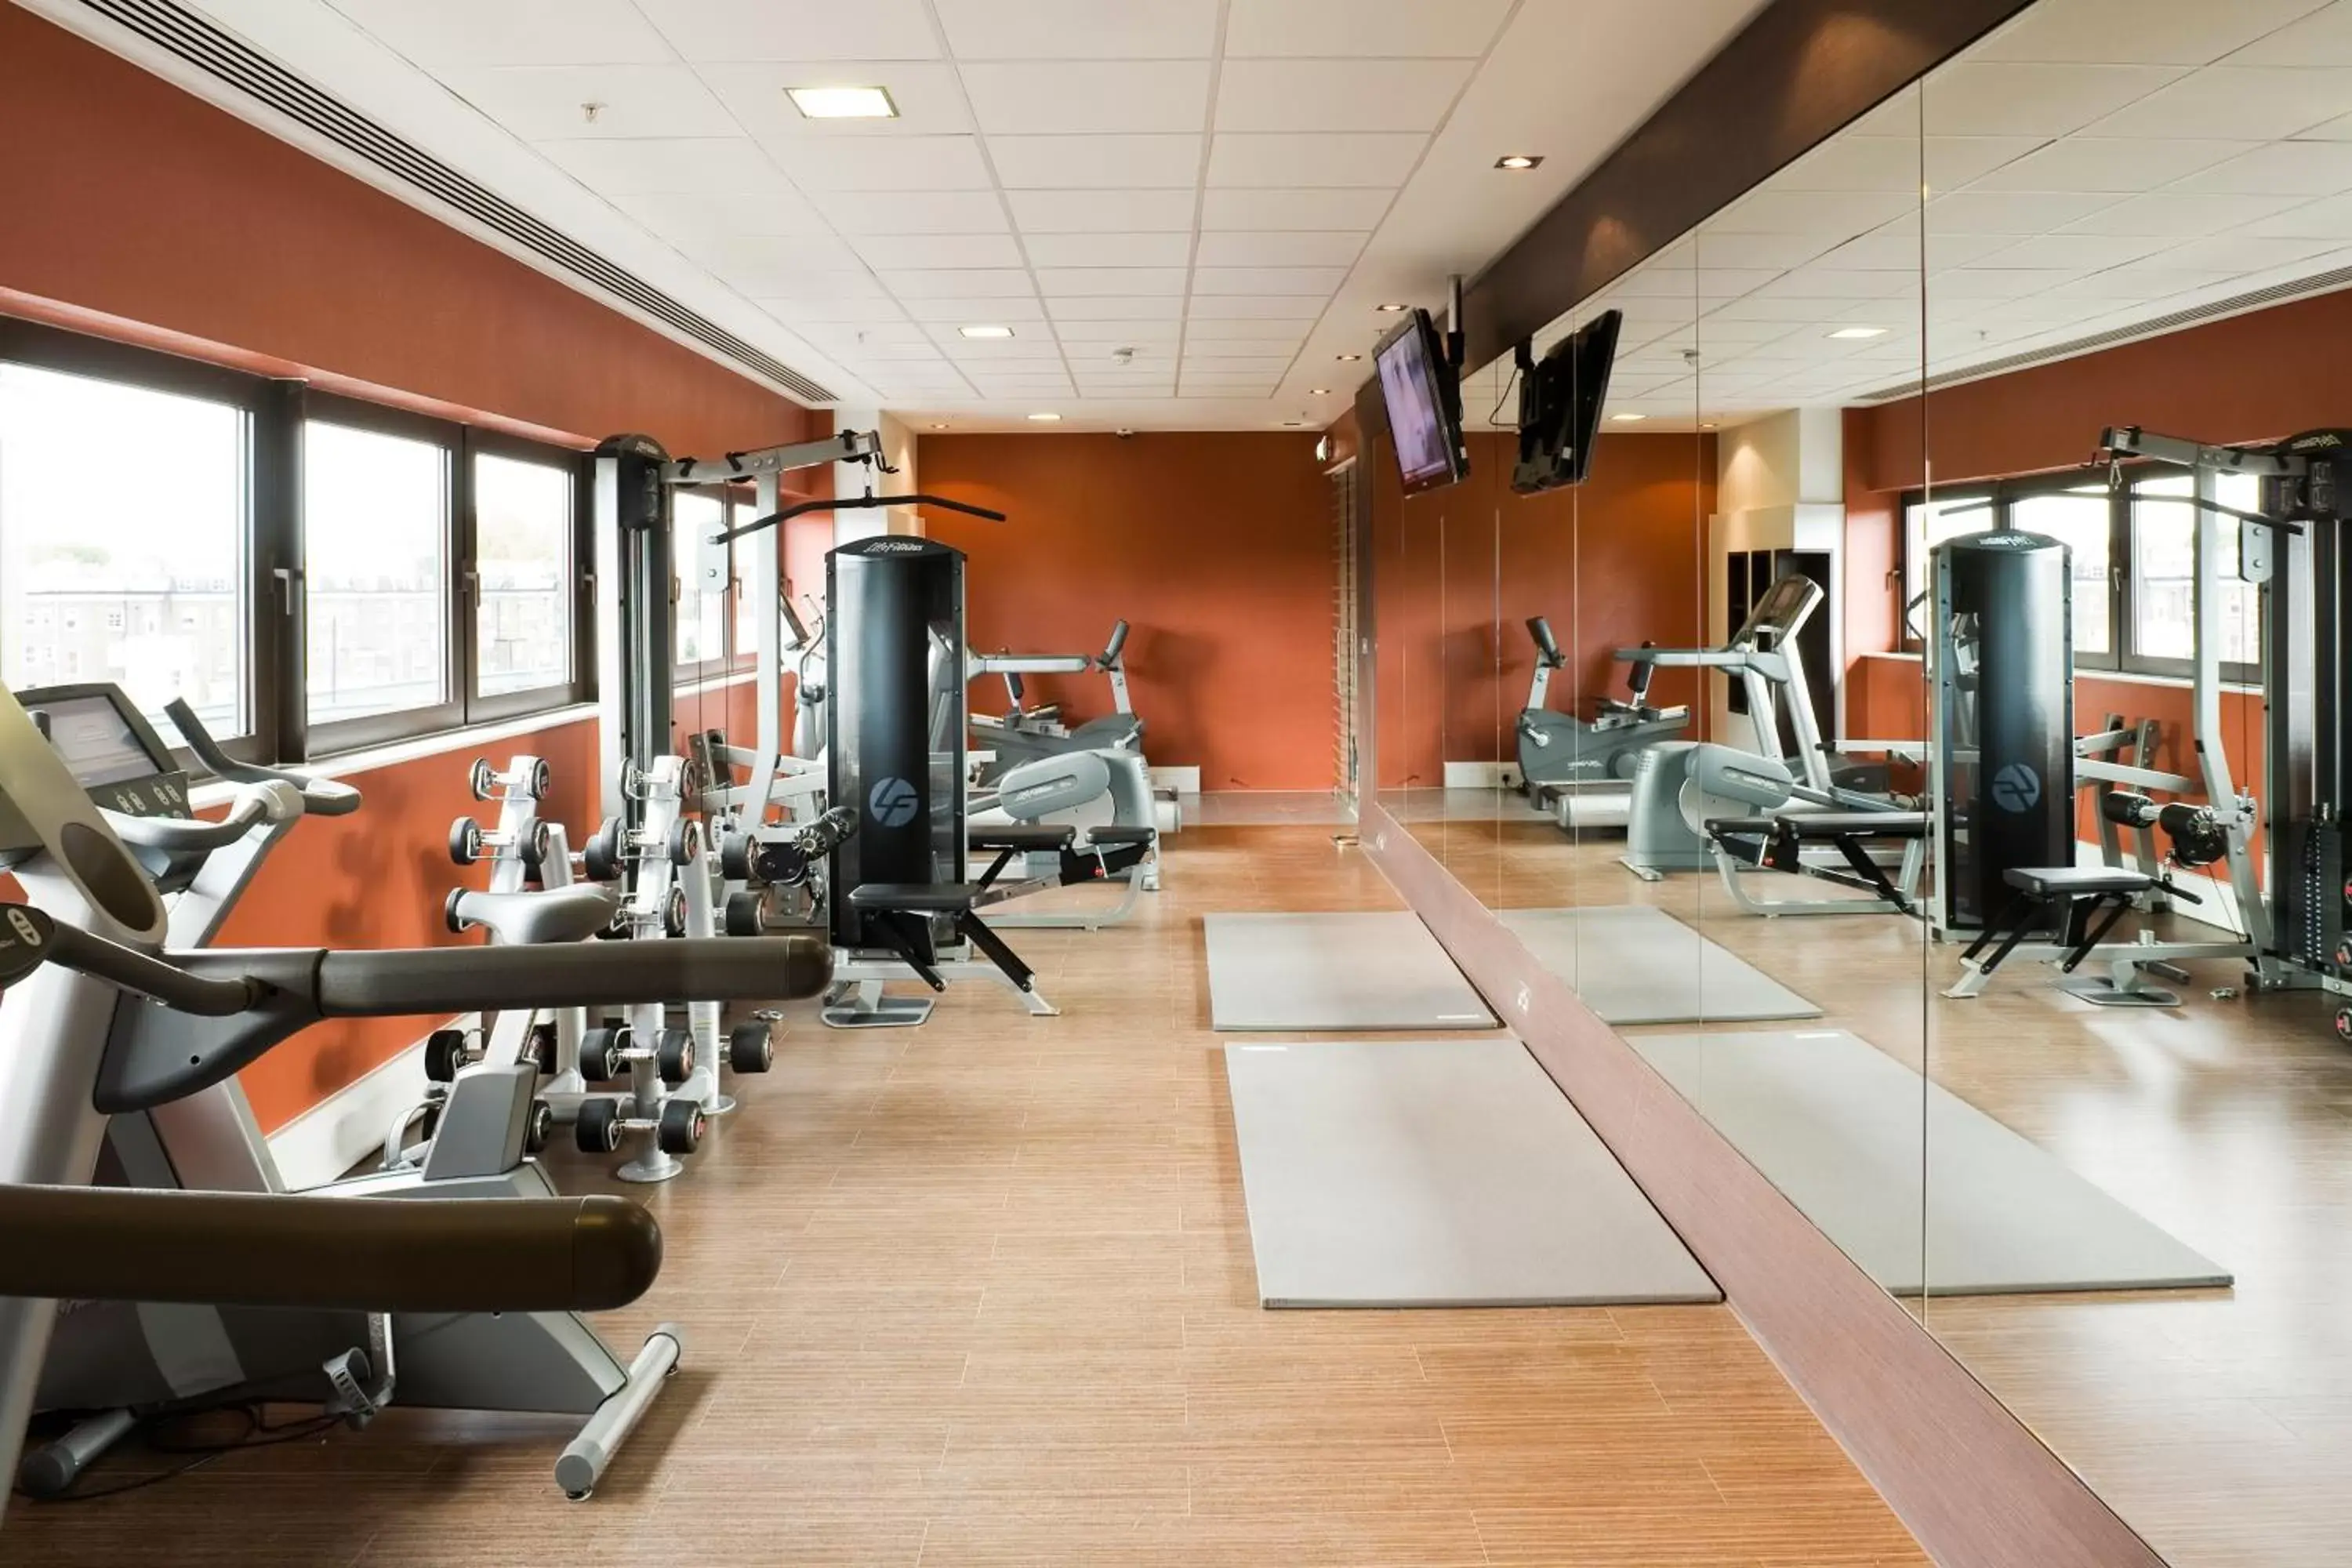 Fitness centre/facilities, Fitness Center/Facilities in Novotel London Paddington